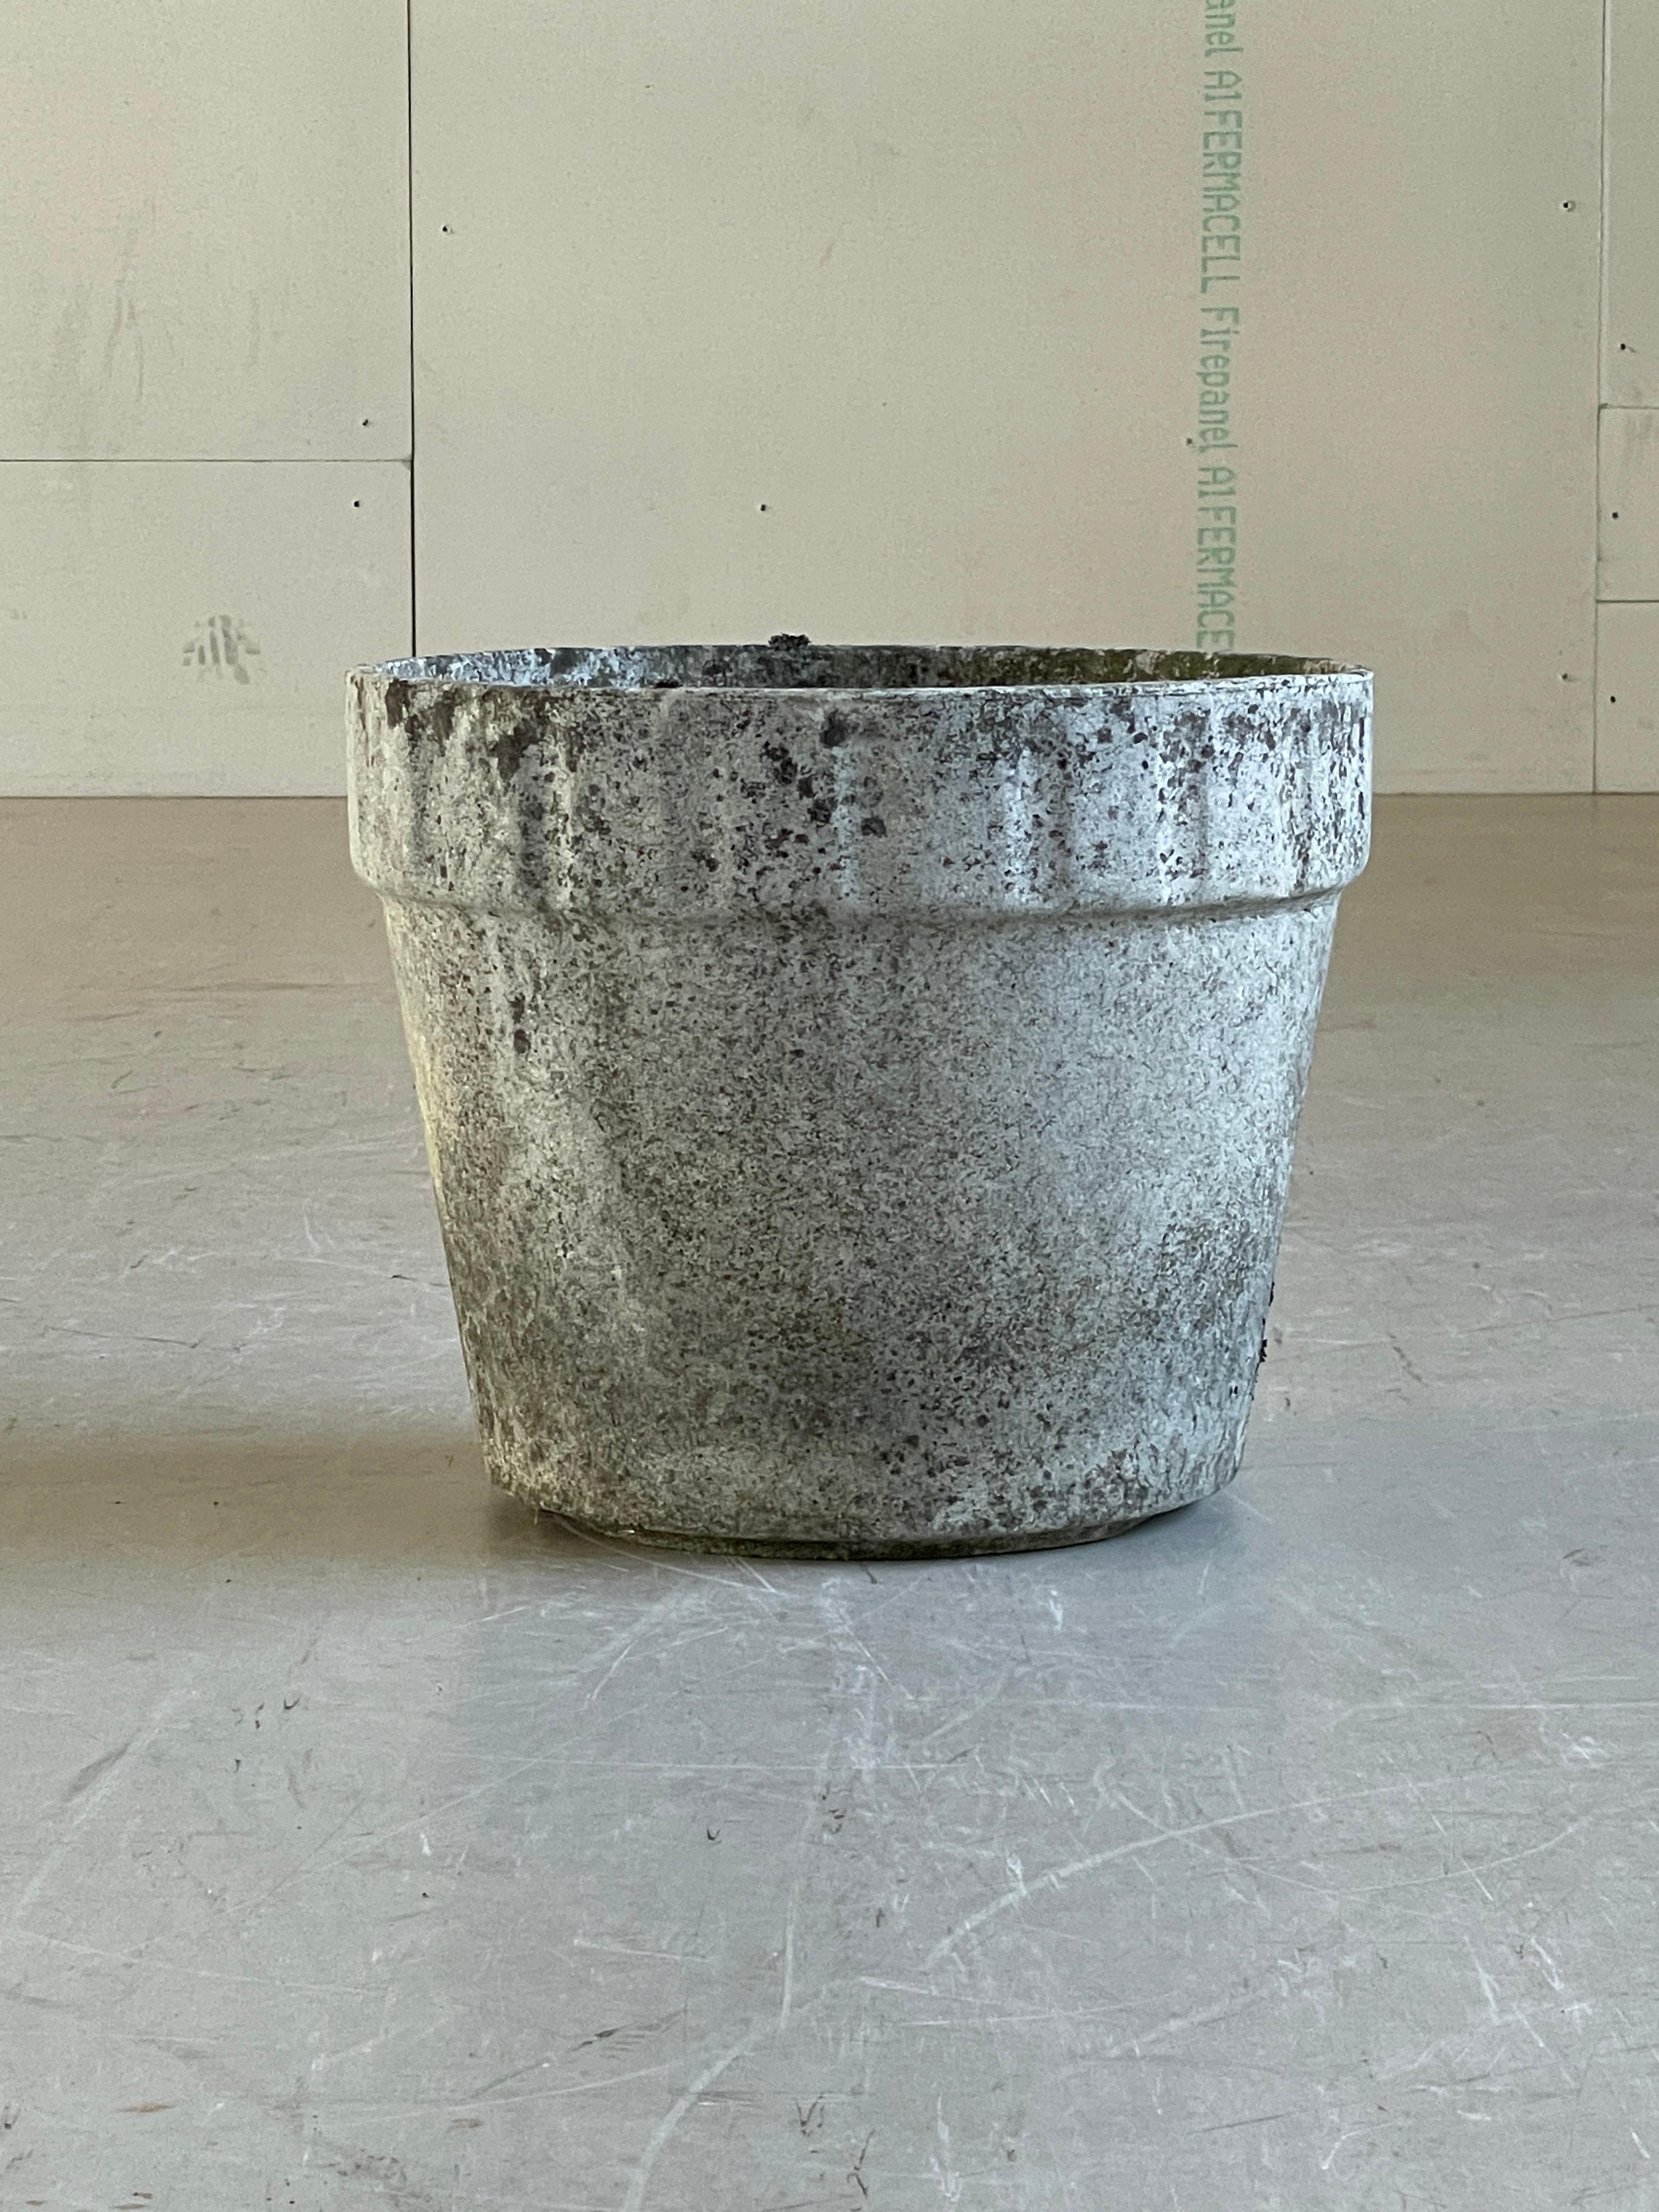 Minimalist Willy Guhl Concrete Planter - Eternit AG, Switzerland #3 For Sale